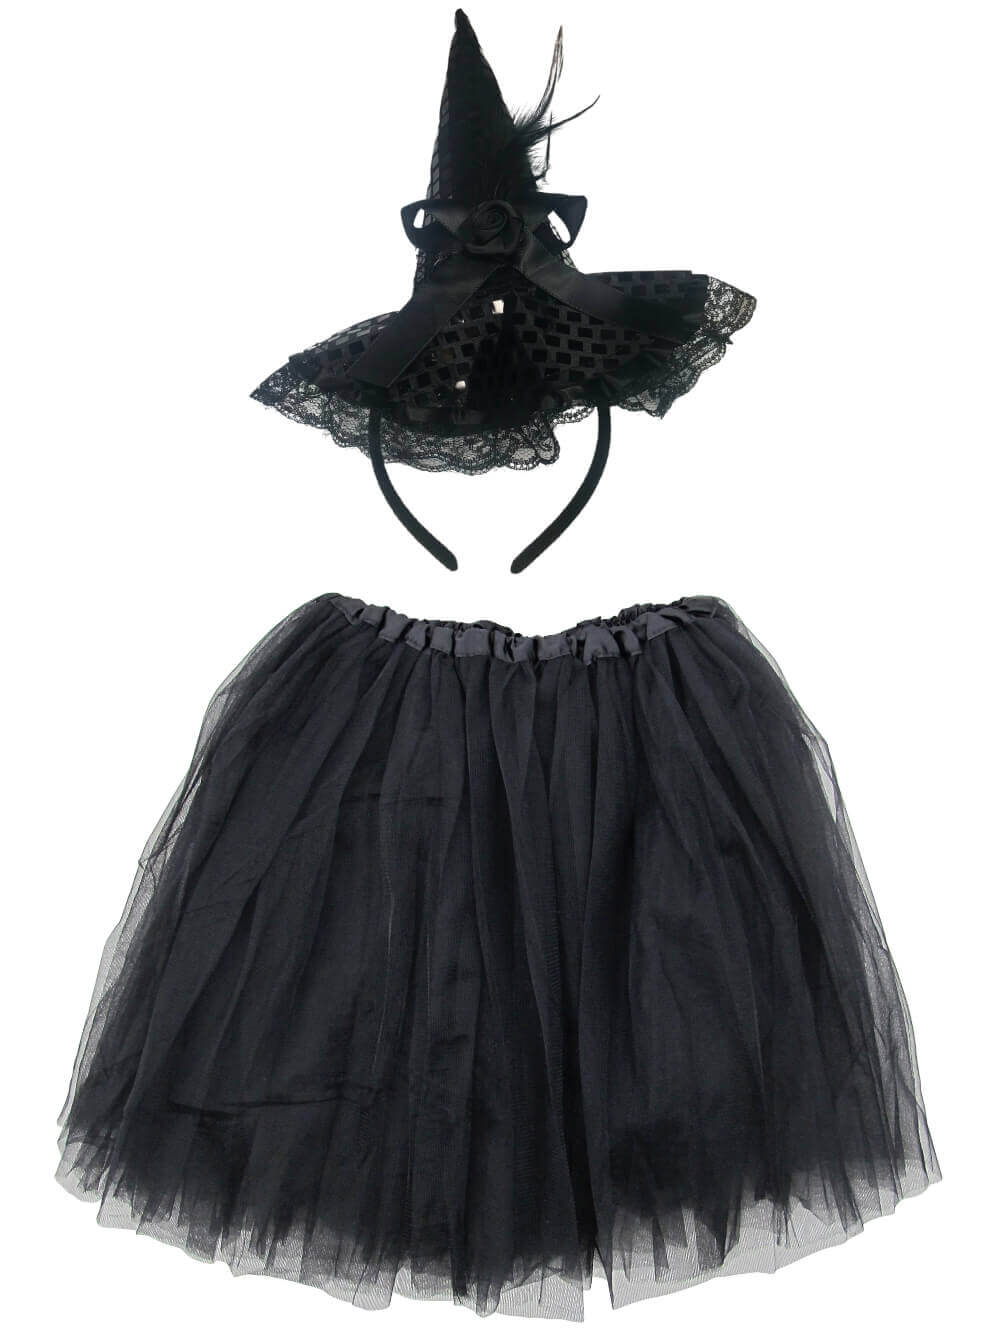 Adult Fancy Black Witch Costume - Black Tutu Skirt & Headband Hat Set for Adult or Plus Size - Sydney So Sweet